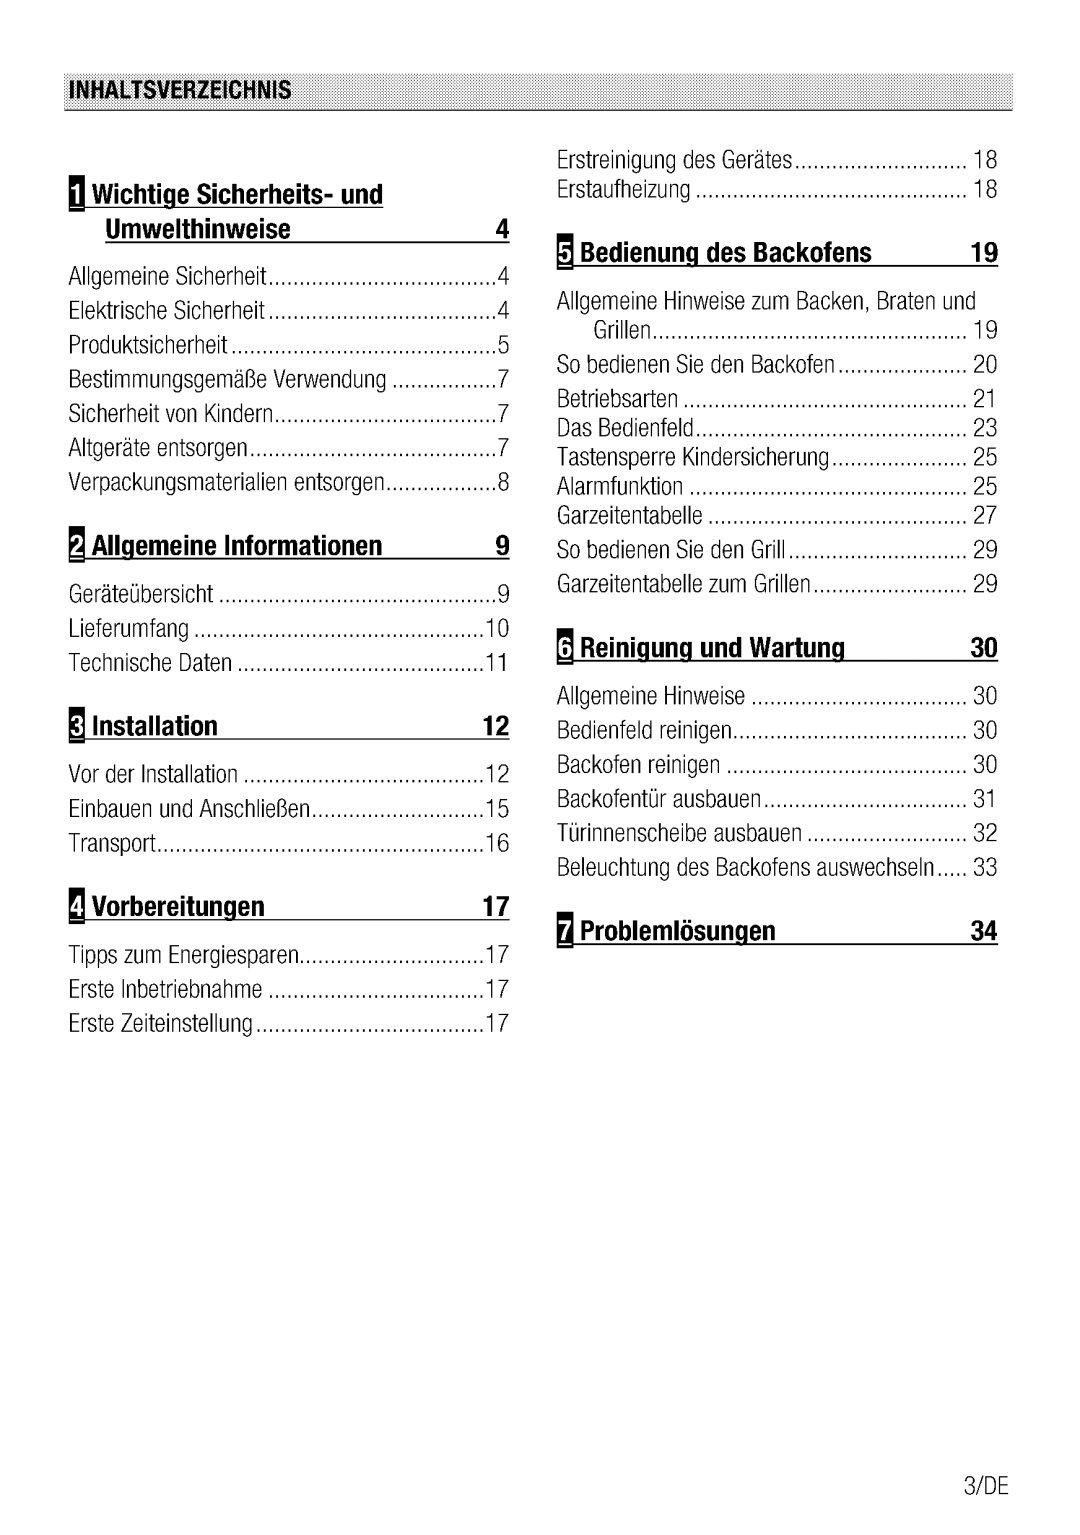 Blomberg beo 9576 manual 